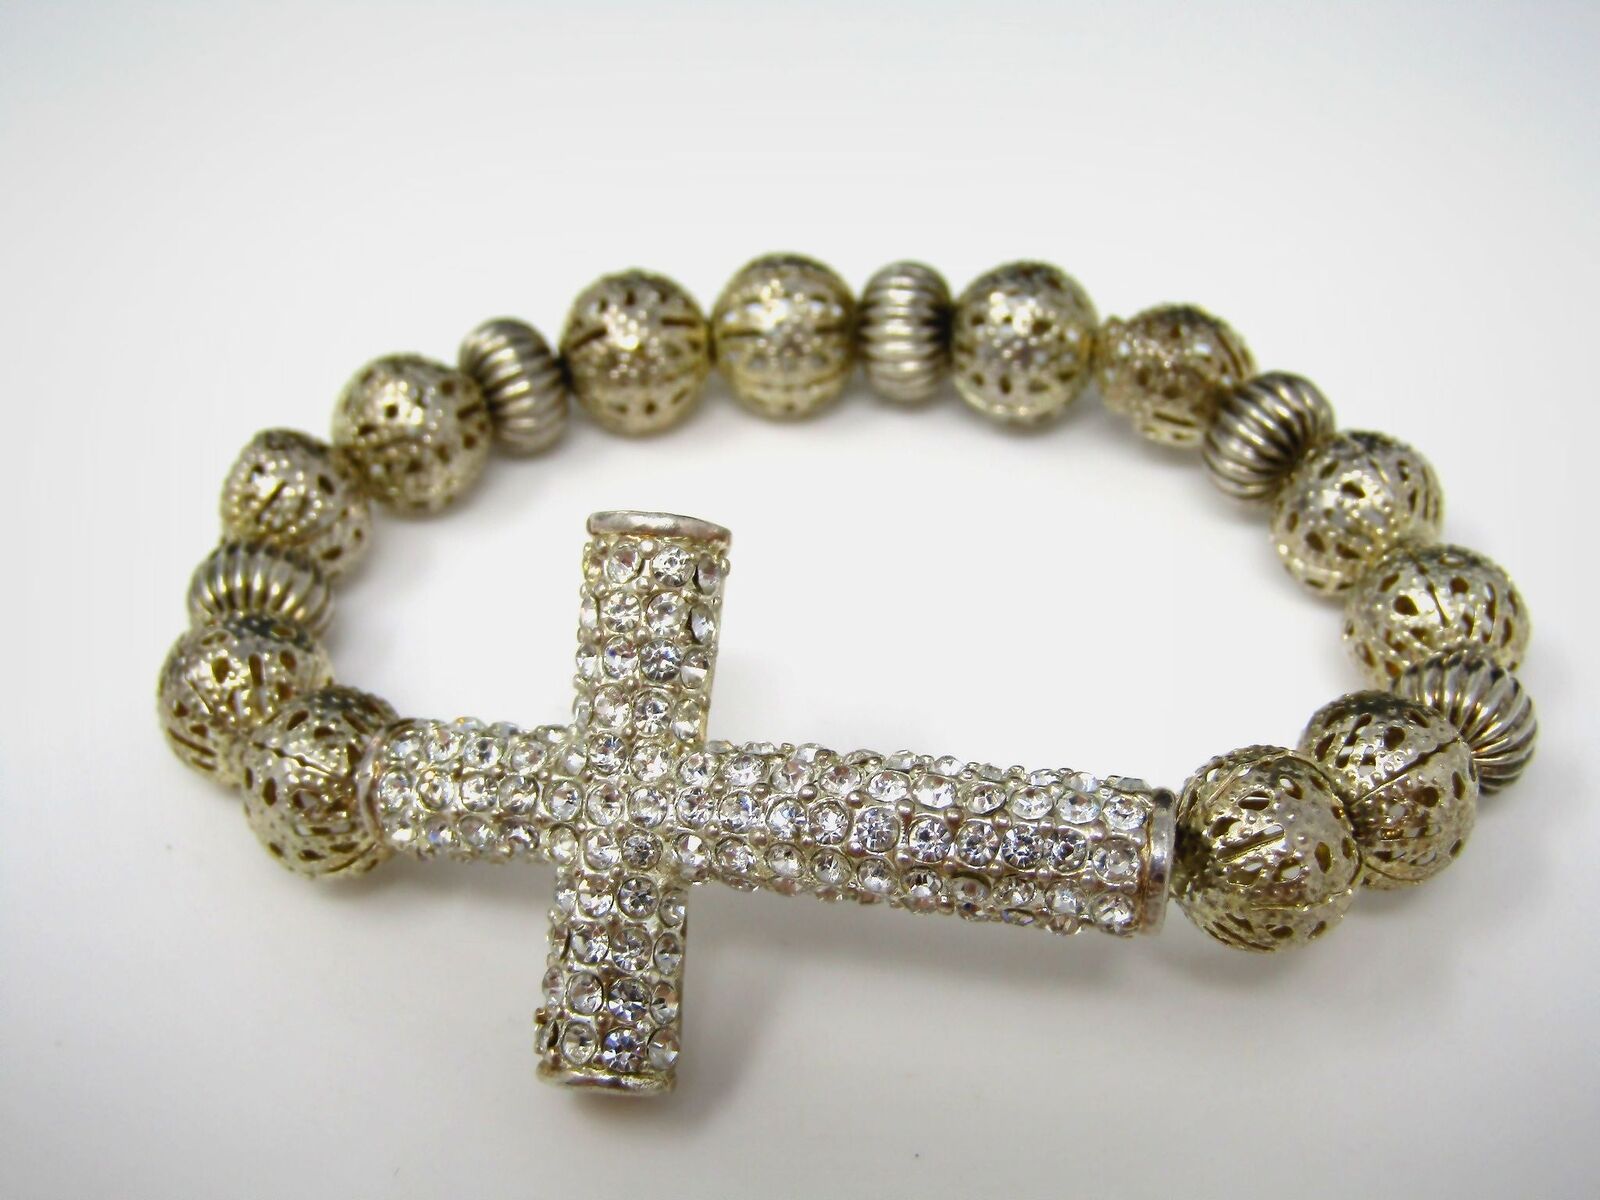 Vintage Christian Bracelet Jewelry: Clear Jewels Cross Silver Tone